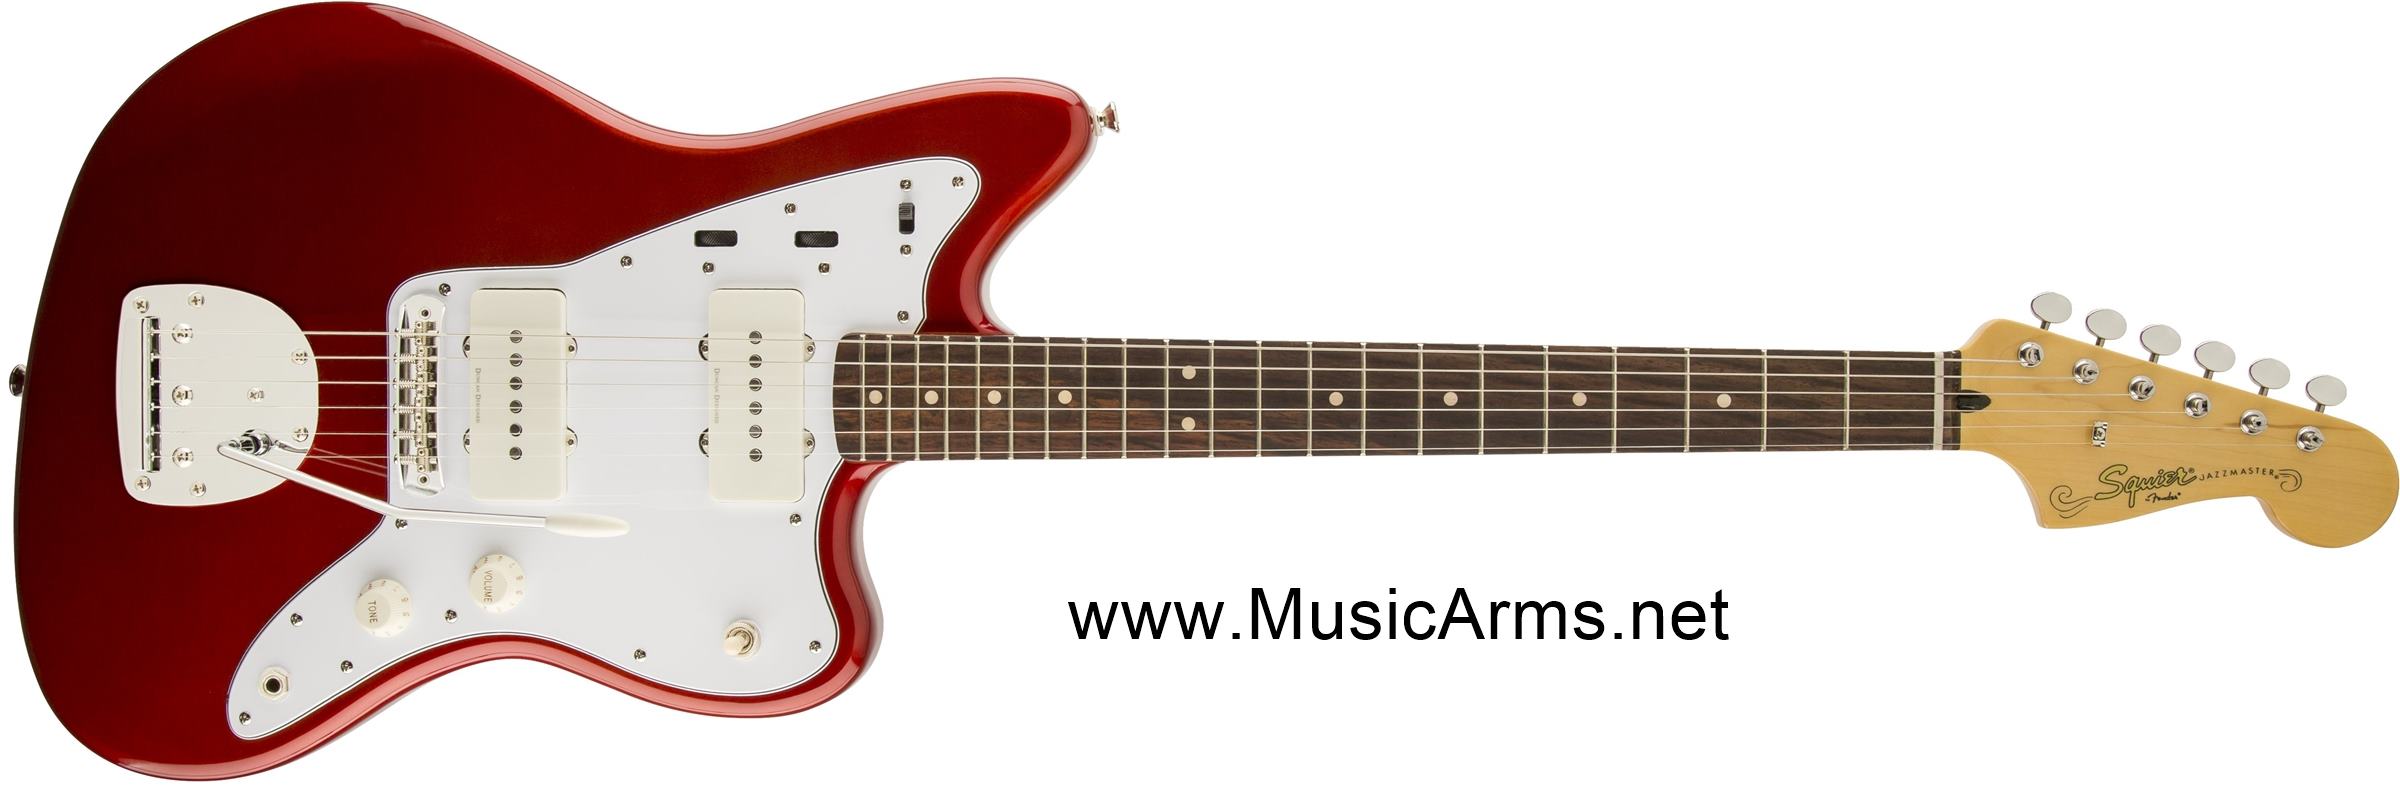 Squier Vintage Modified Jazzmaster | Music Arms ศูนย์รวม ...